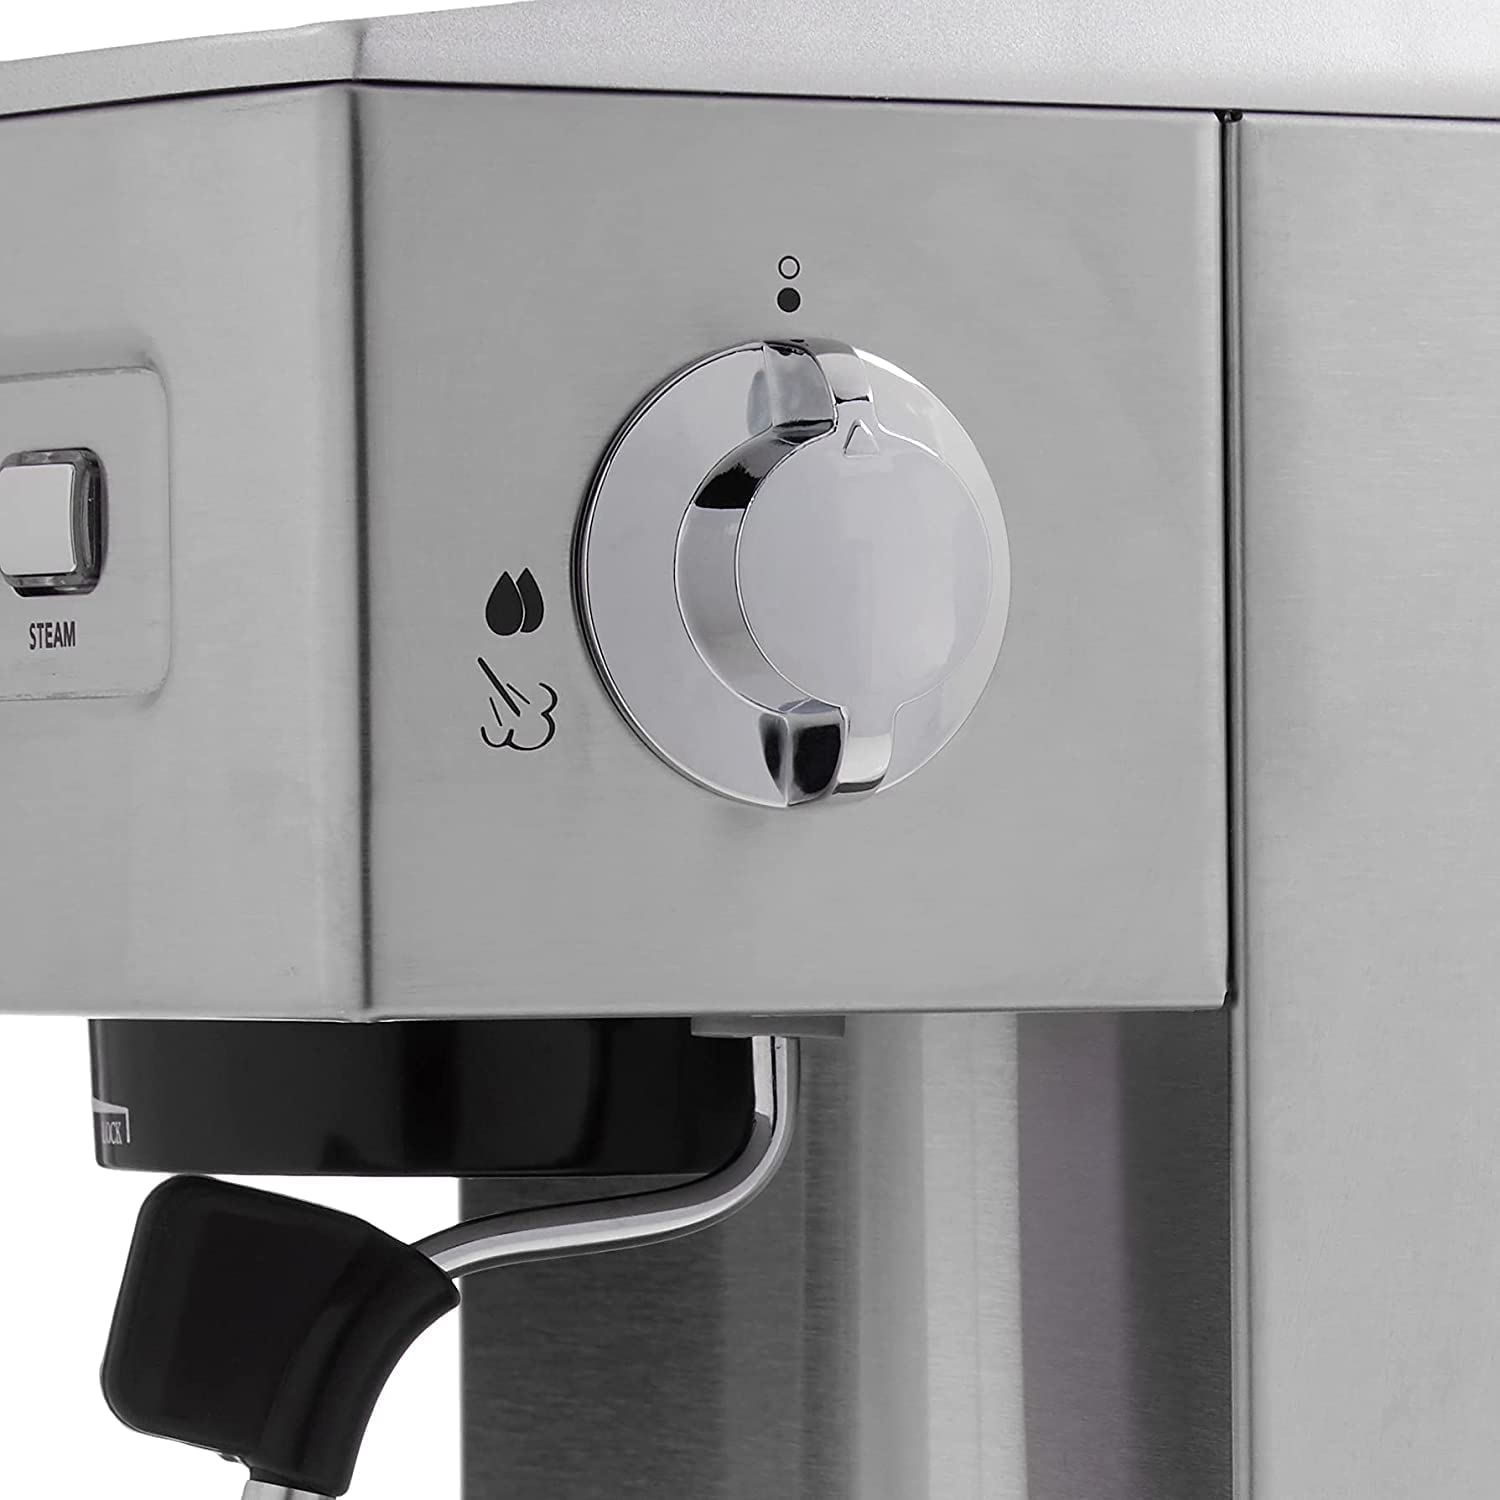 Cuisinart Coffee Maker, Single Serve 72-Ounce Reservoir Coffee Machine,  Programmable Brewing & Hot Water Dispenser, Stainless Steel, SS-10P1,Silver